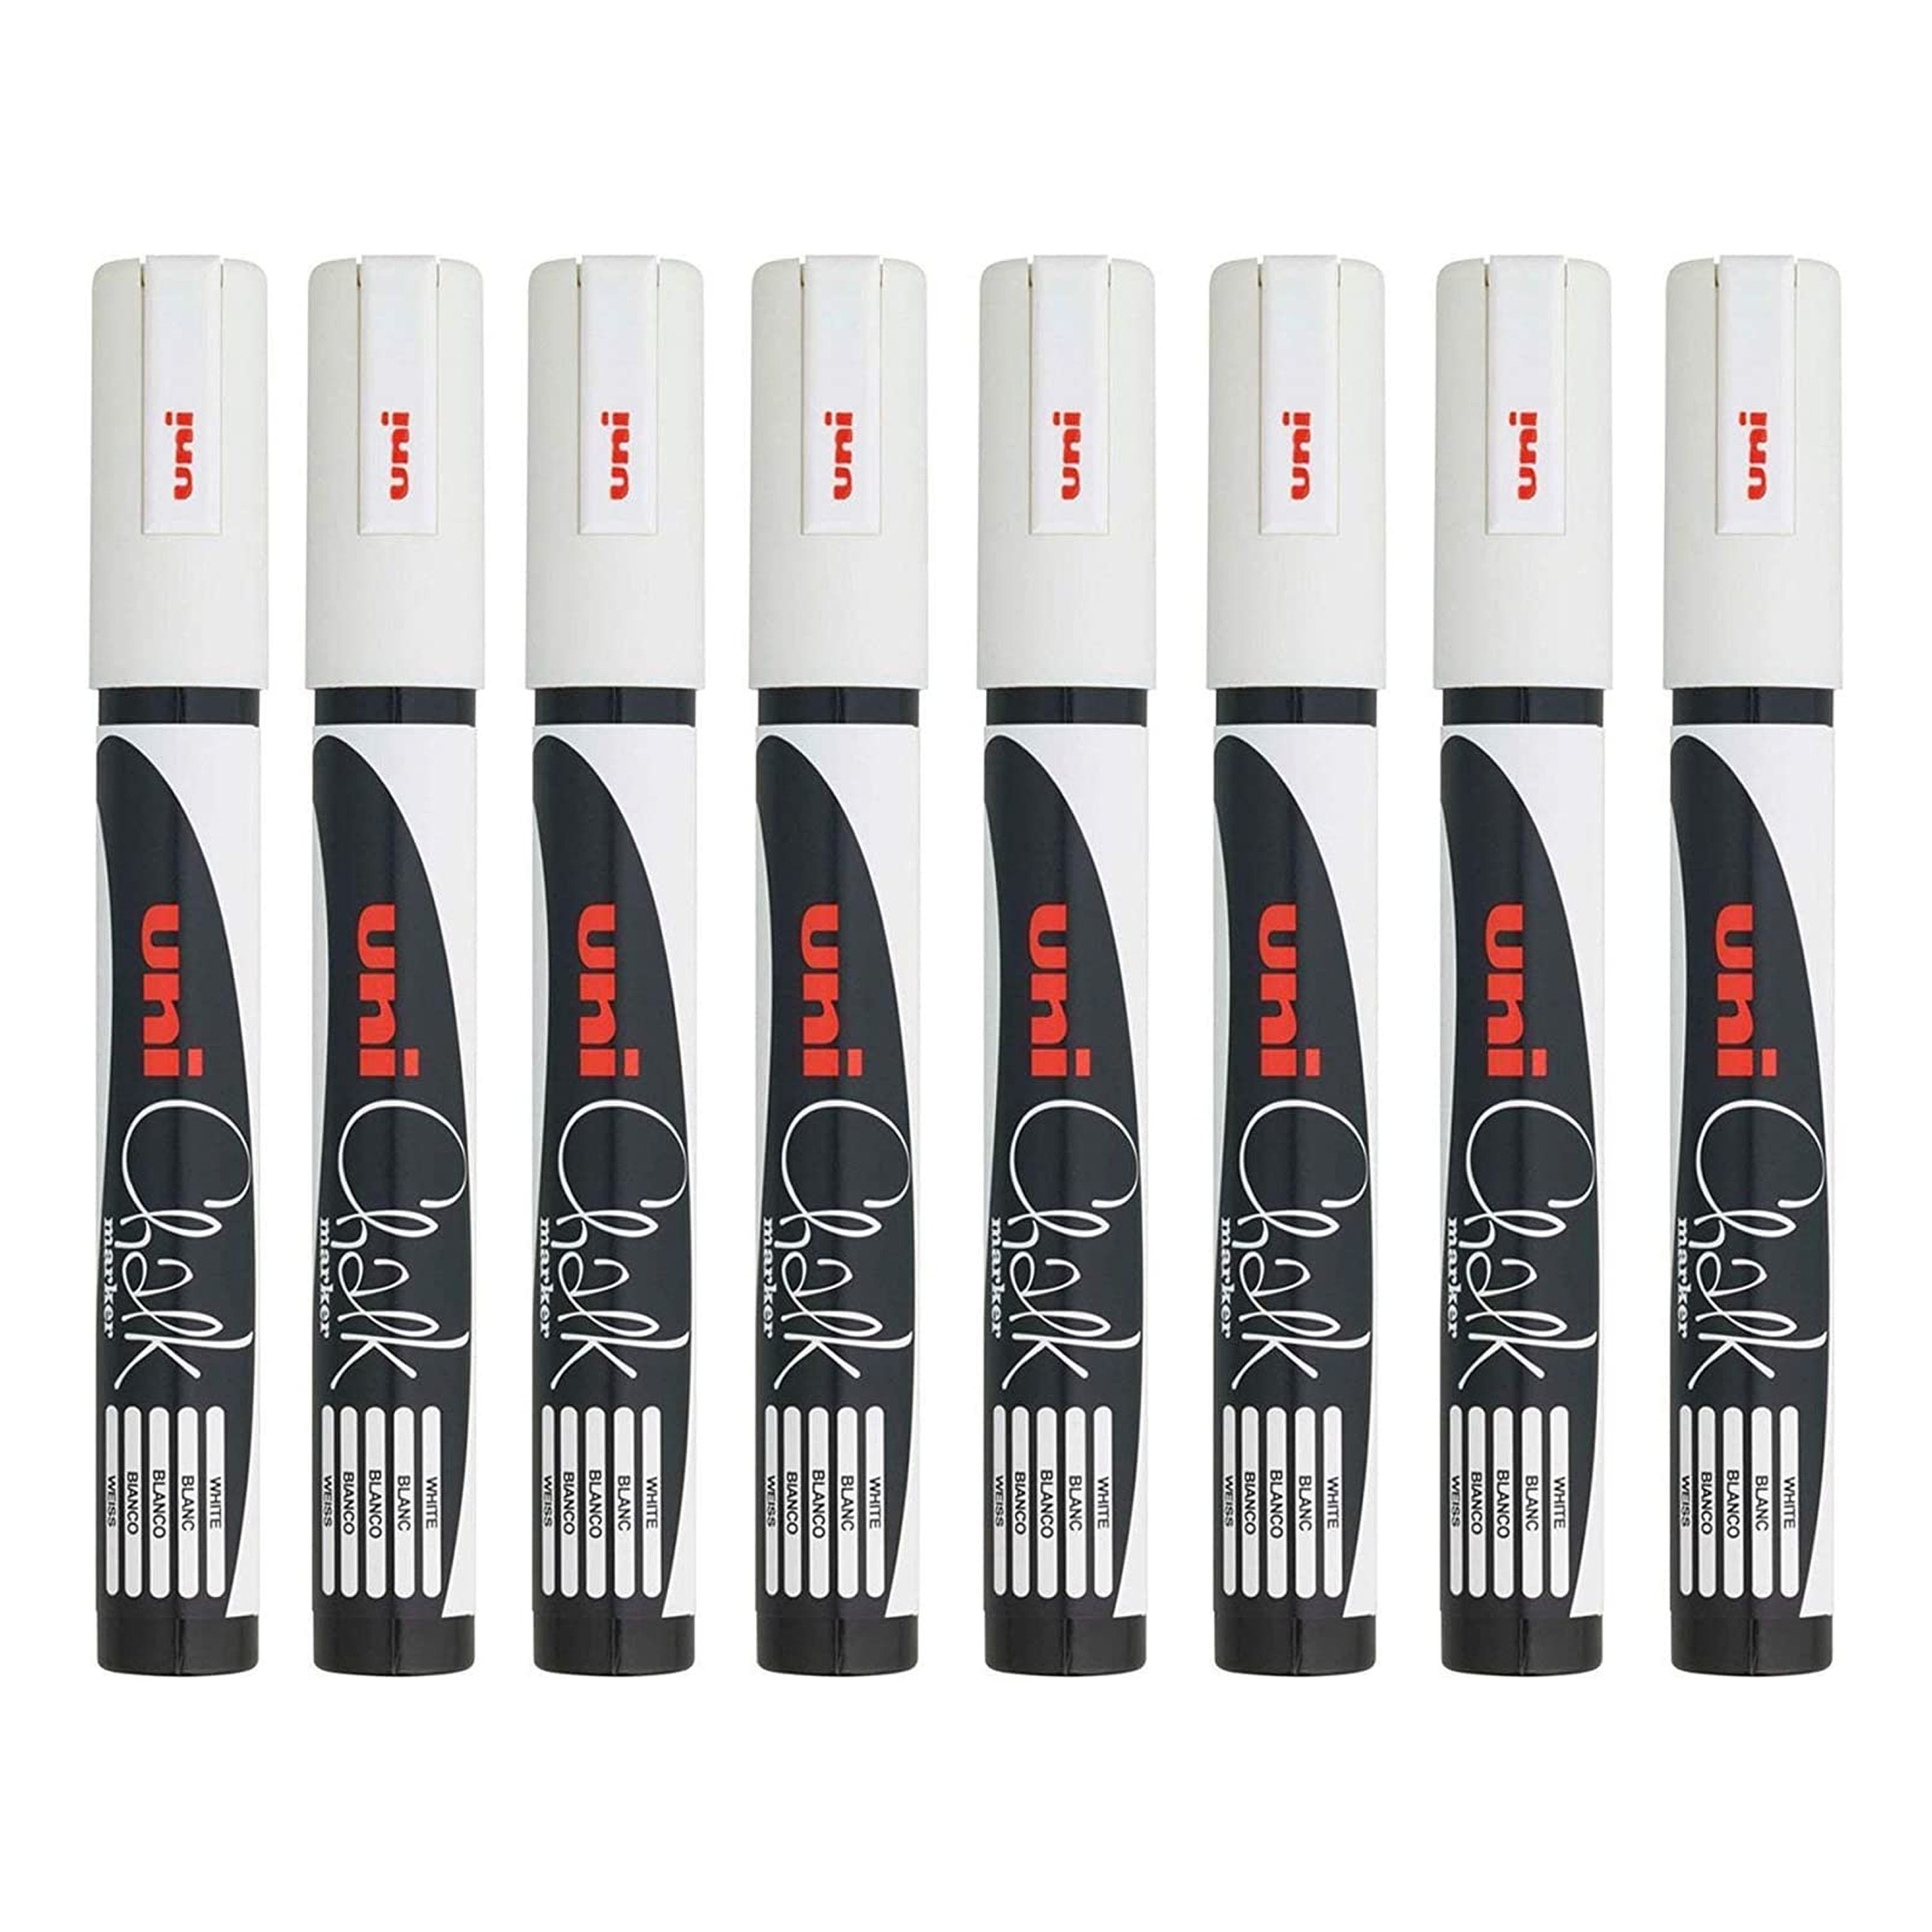 Uni-ball PWE-5M Liquid Chalk Marker Pens 8 Pack